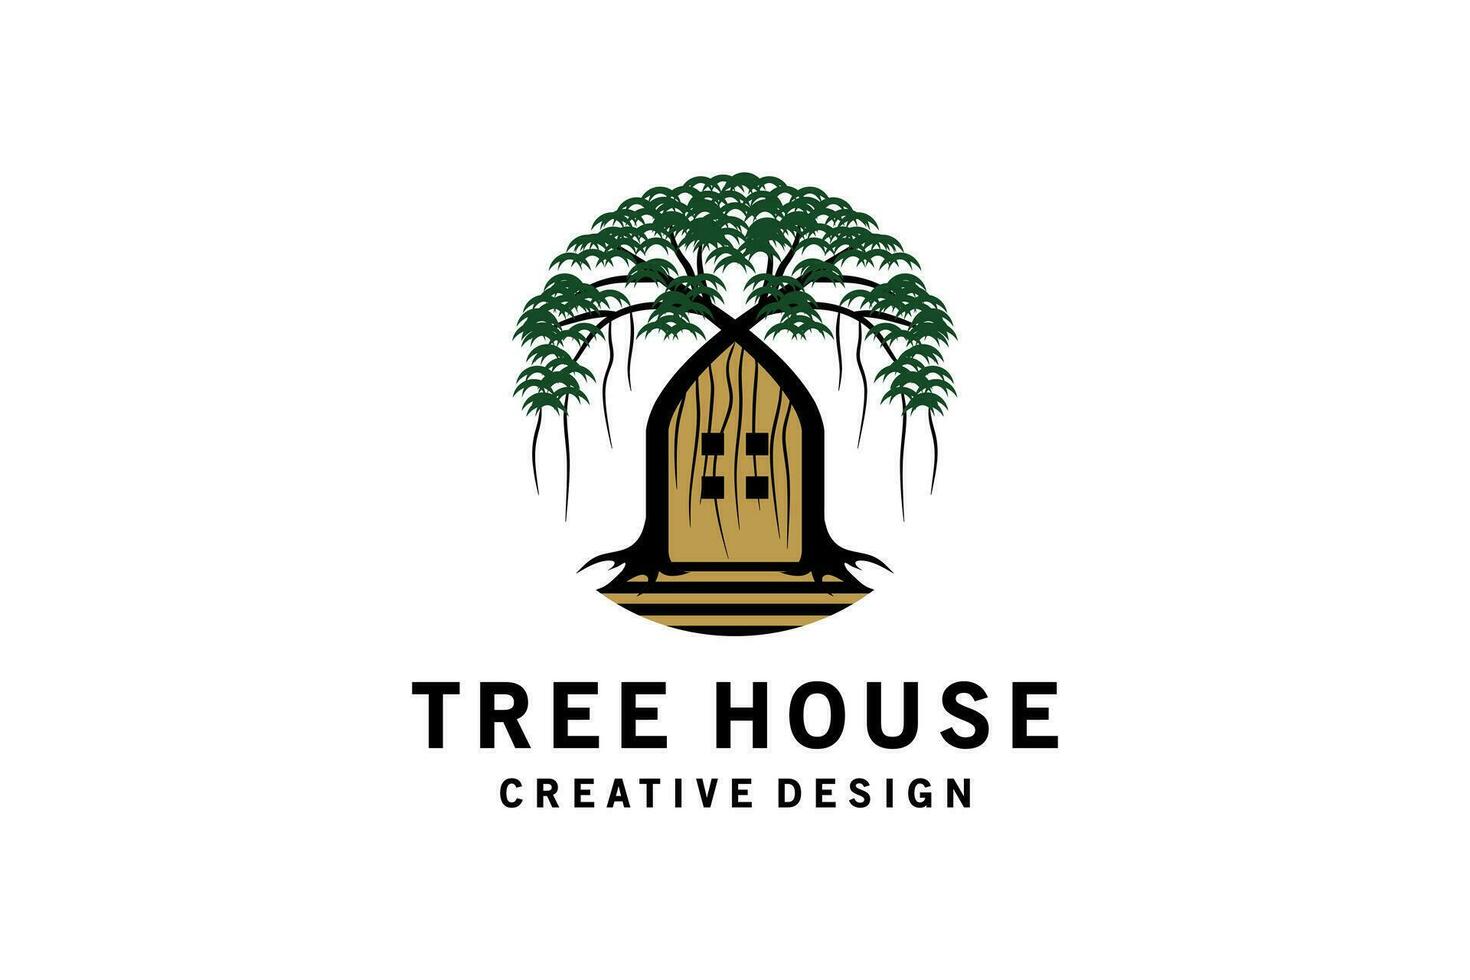 Tree house logo design, green tree log house vector illustration